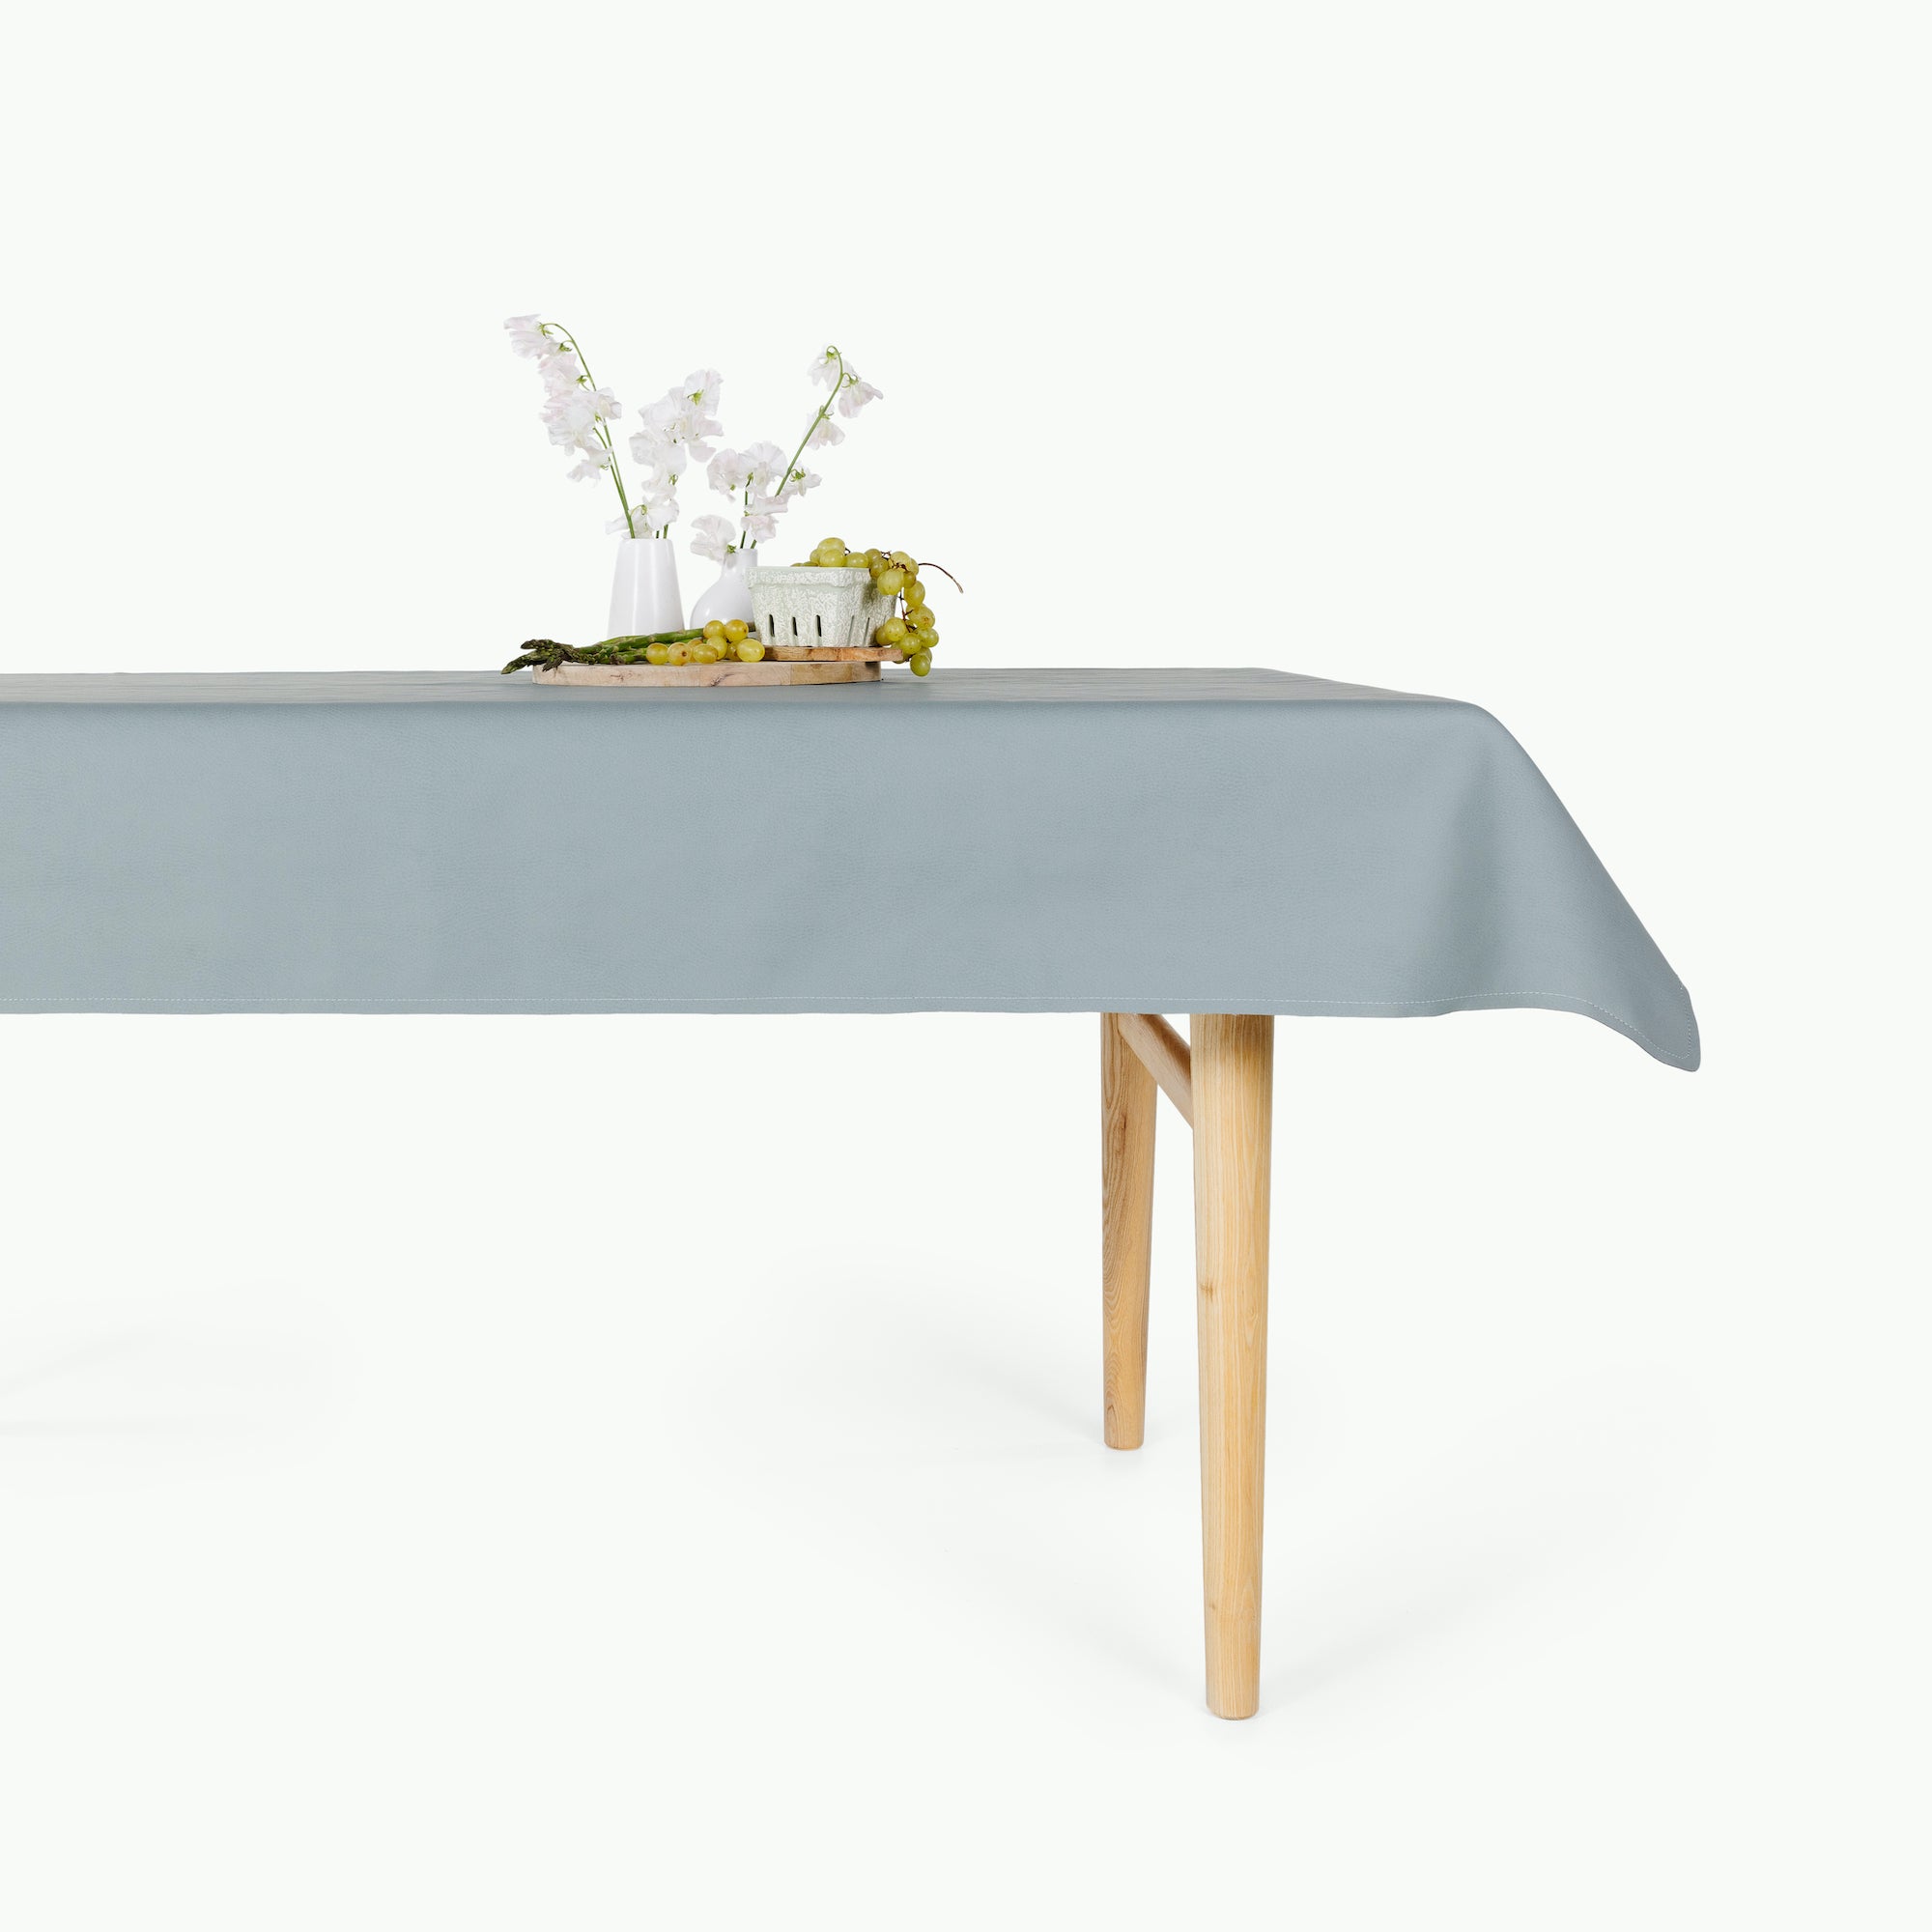 Amalfi / 10 Foot@tablecloth on table